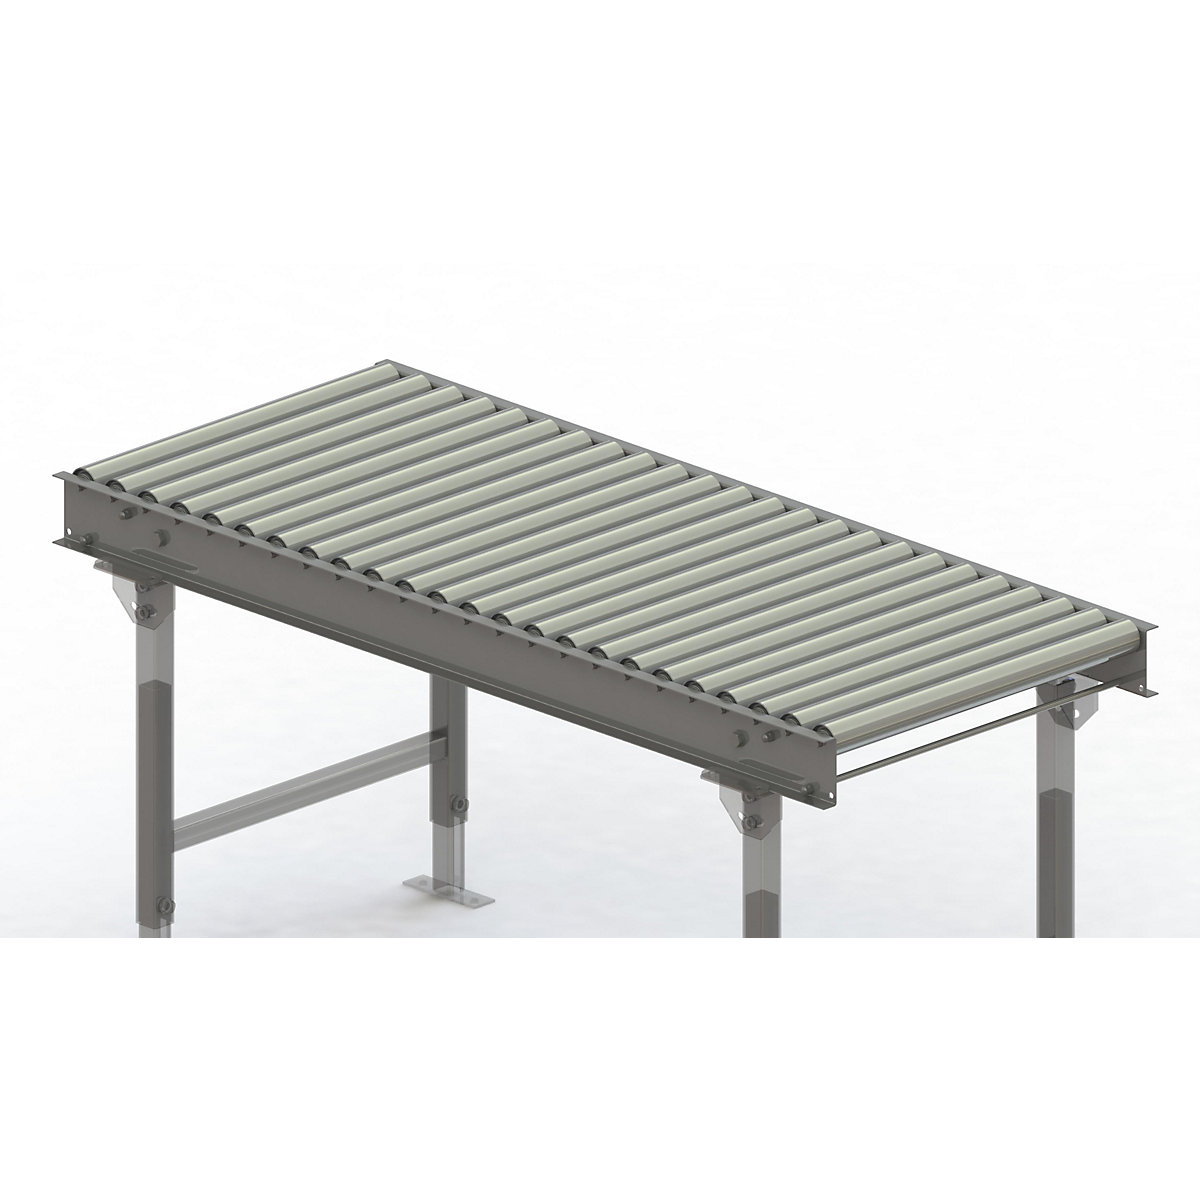 Gura – Roller conveyor, steel frame with zinc plated steel rollers, track width 600 mm, distance between axles 62.5 mm, length 1.5 m